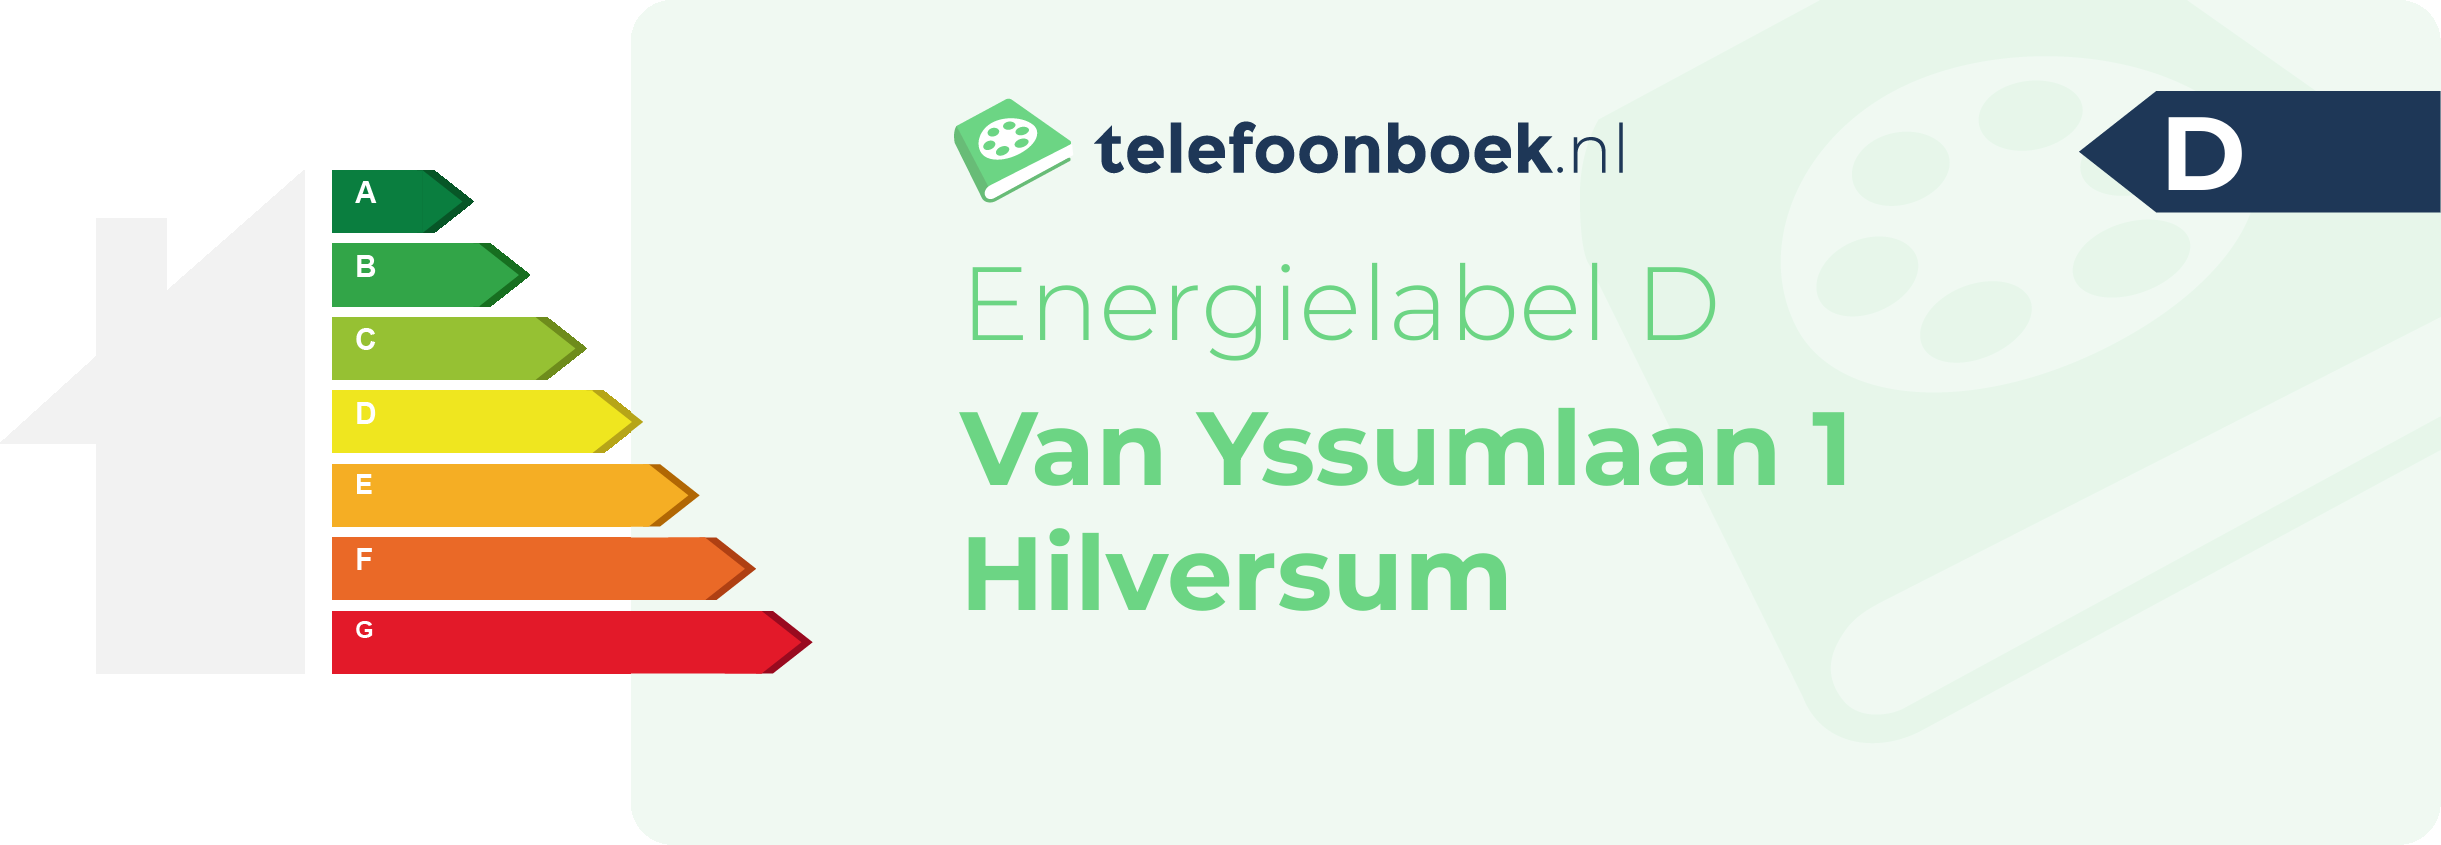 Energielabel Van Yssumlaan 1 Hilversum